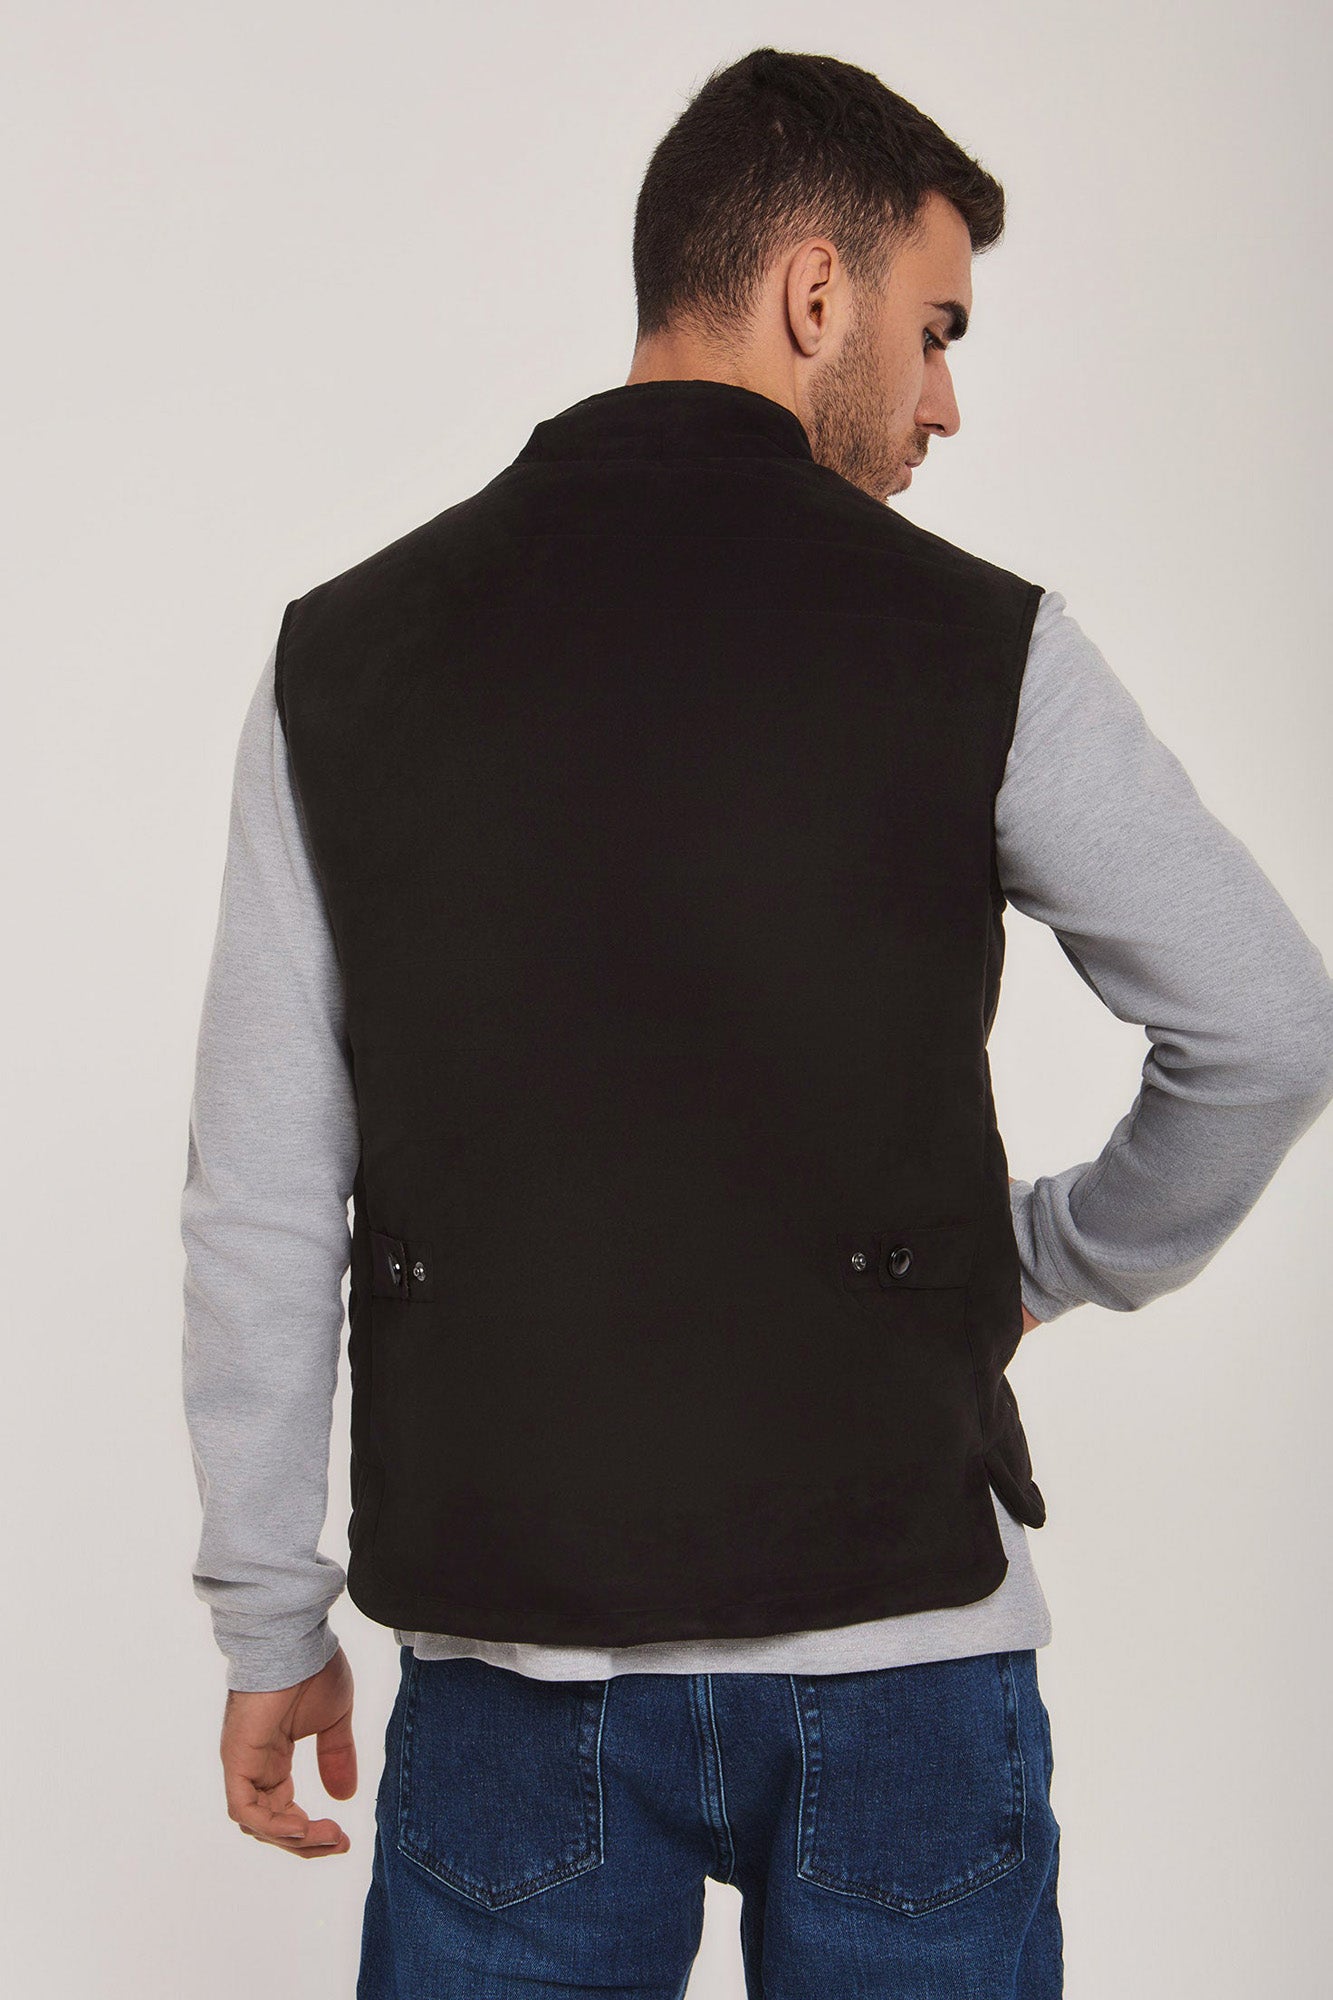 Vest - Zipper Closure - Side Pockets